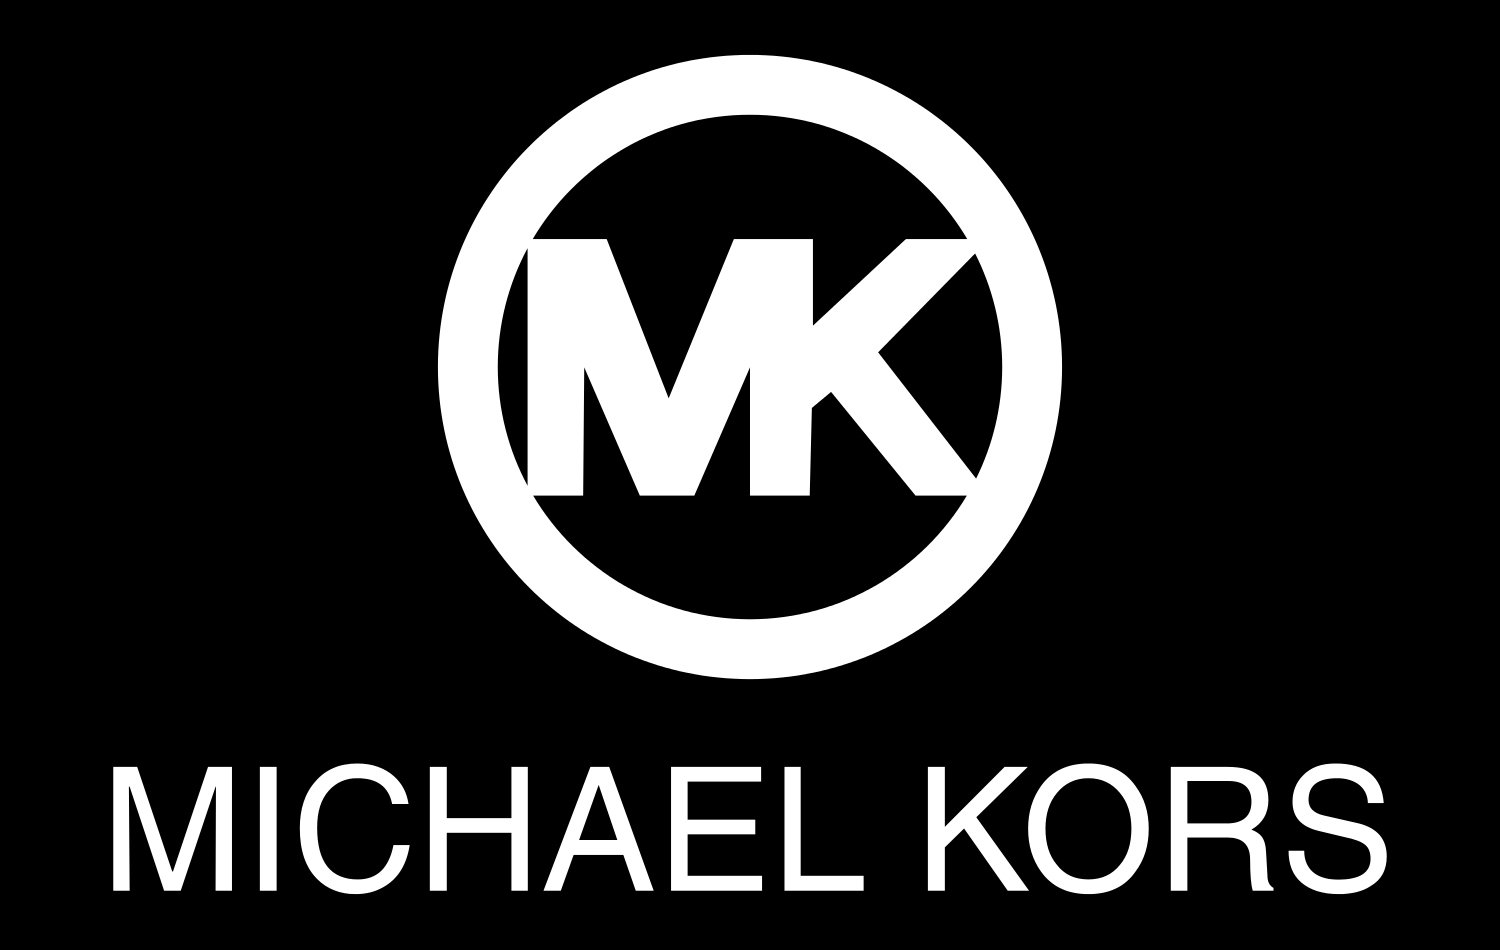 Michael Kors Logo, Michael Kors Symbol, Meaning, History and Evolution